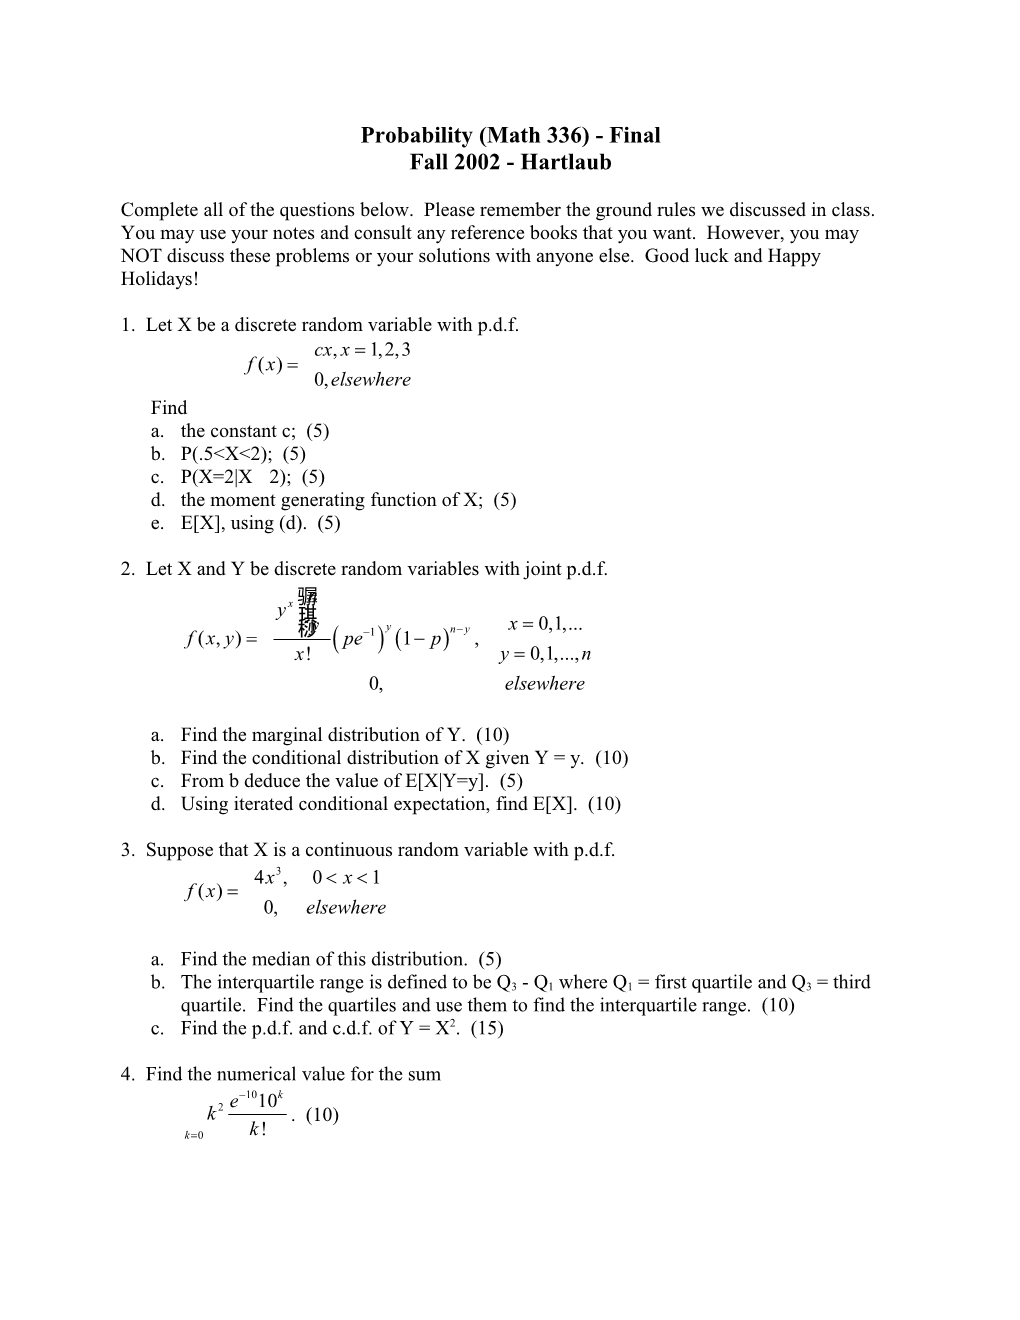 Probability (Math 336) - Exam #2